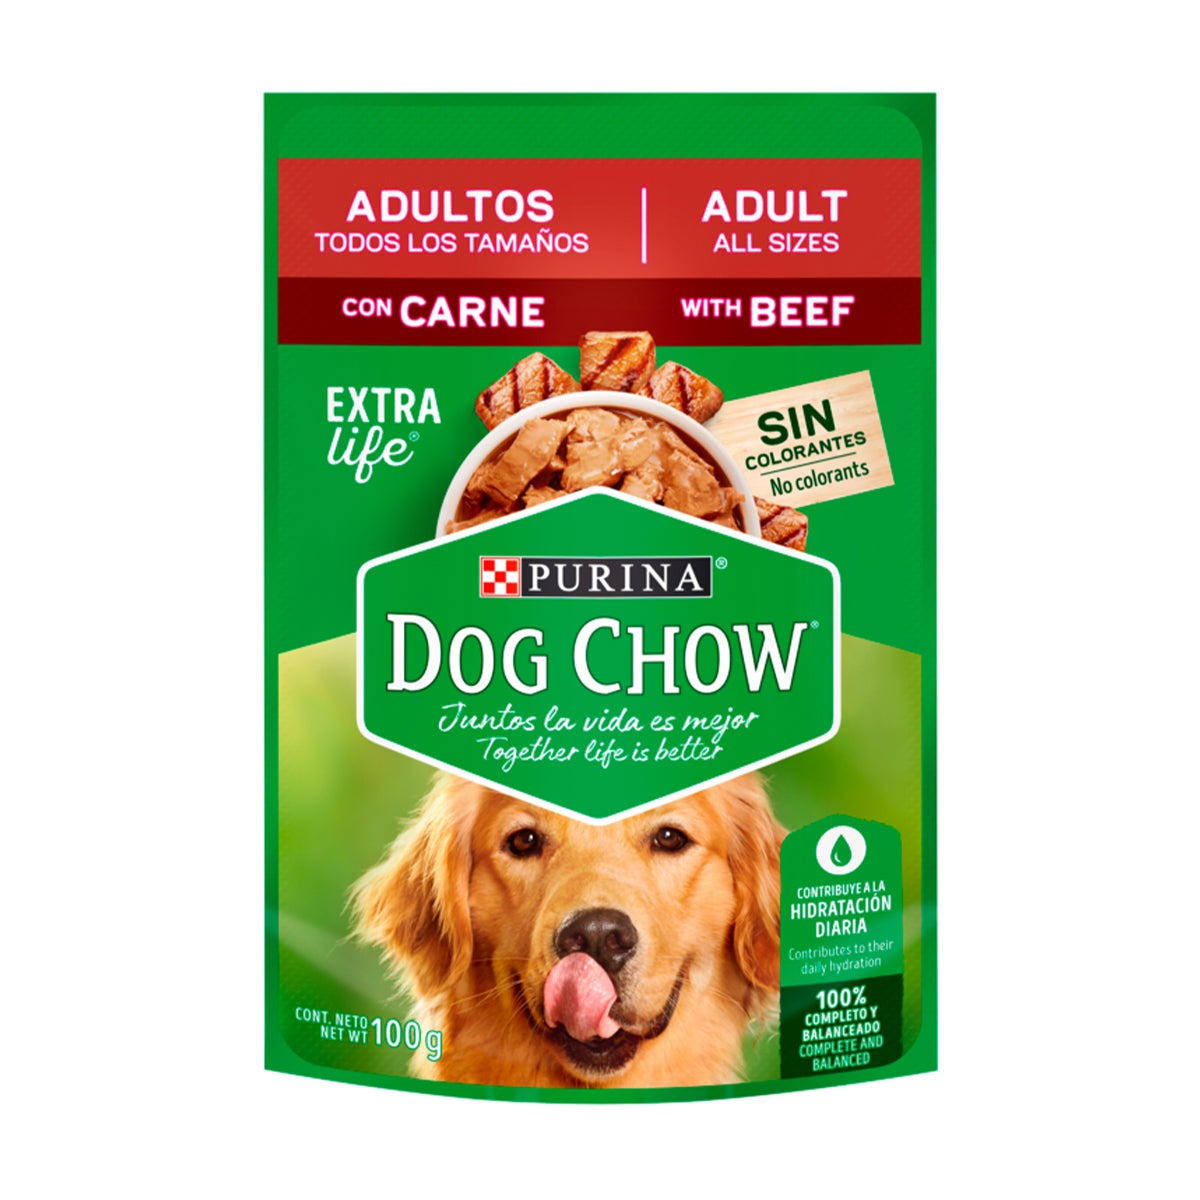 purina-dog-chow-adultos-todos-los-tama%C3%B1os-con-carne.jpg